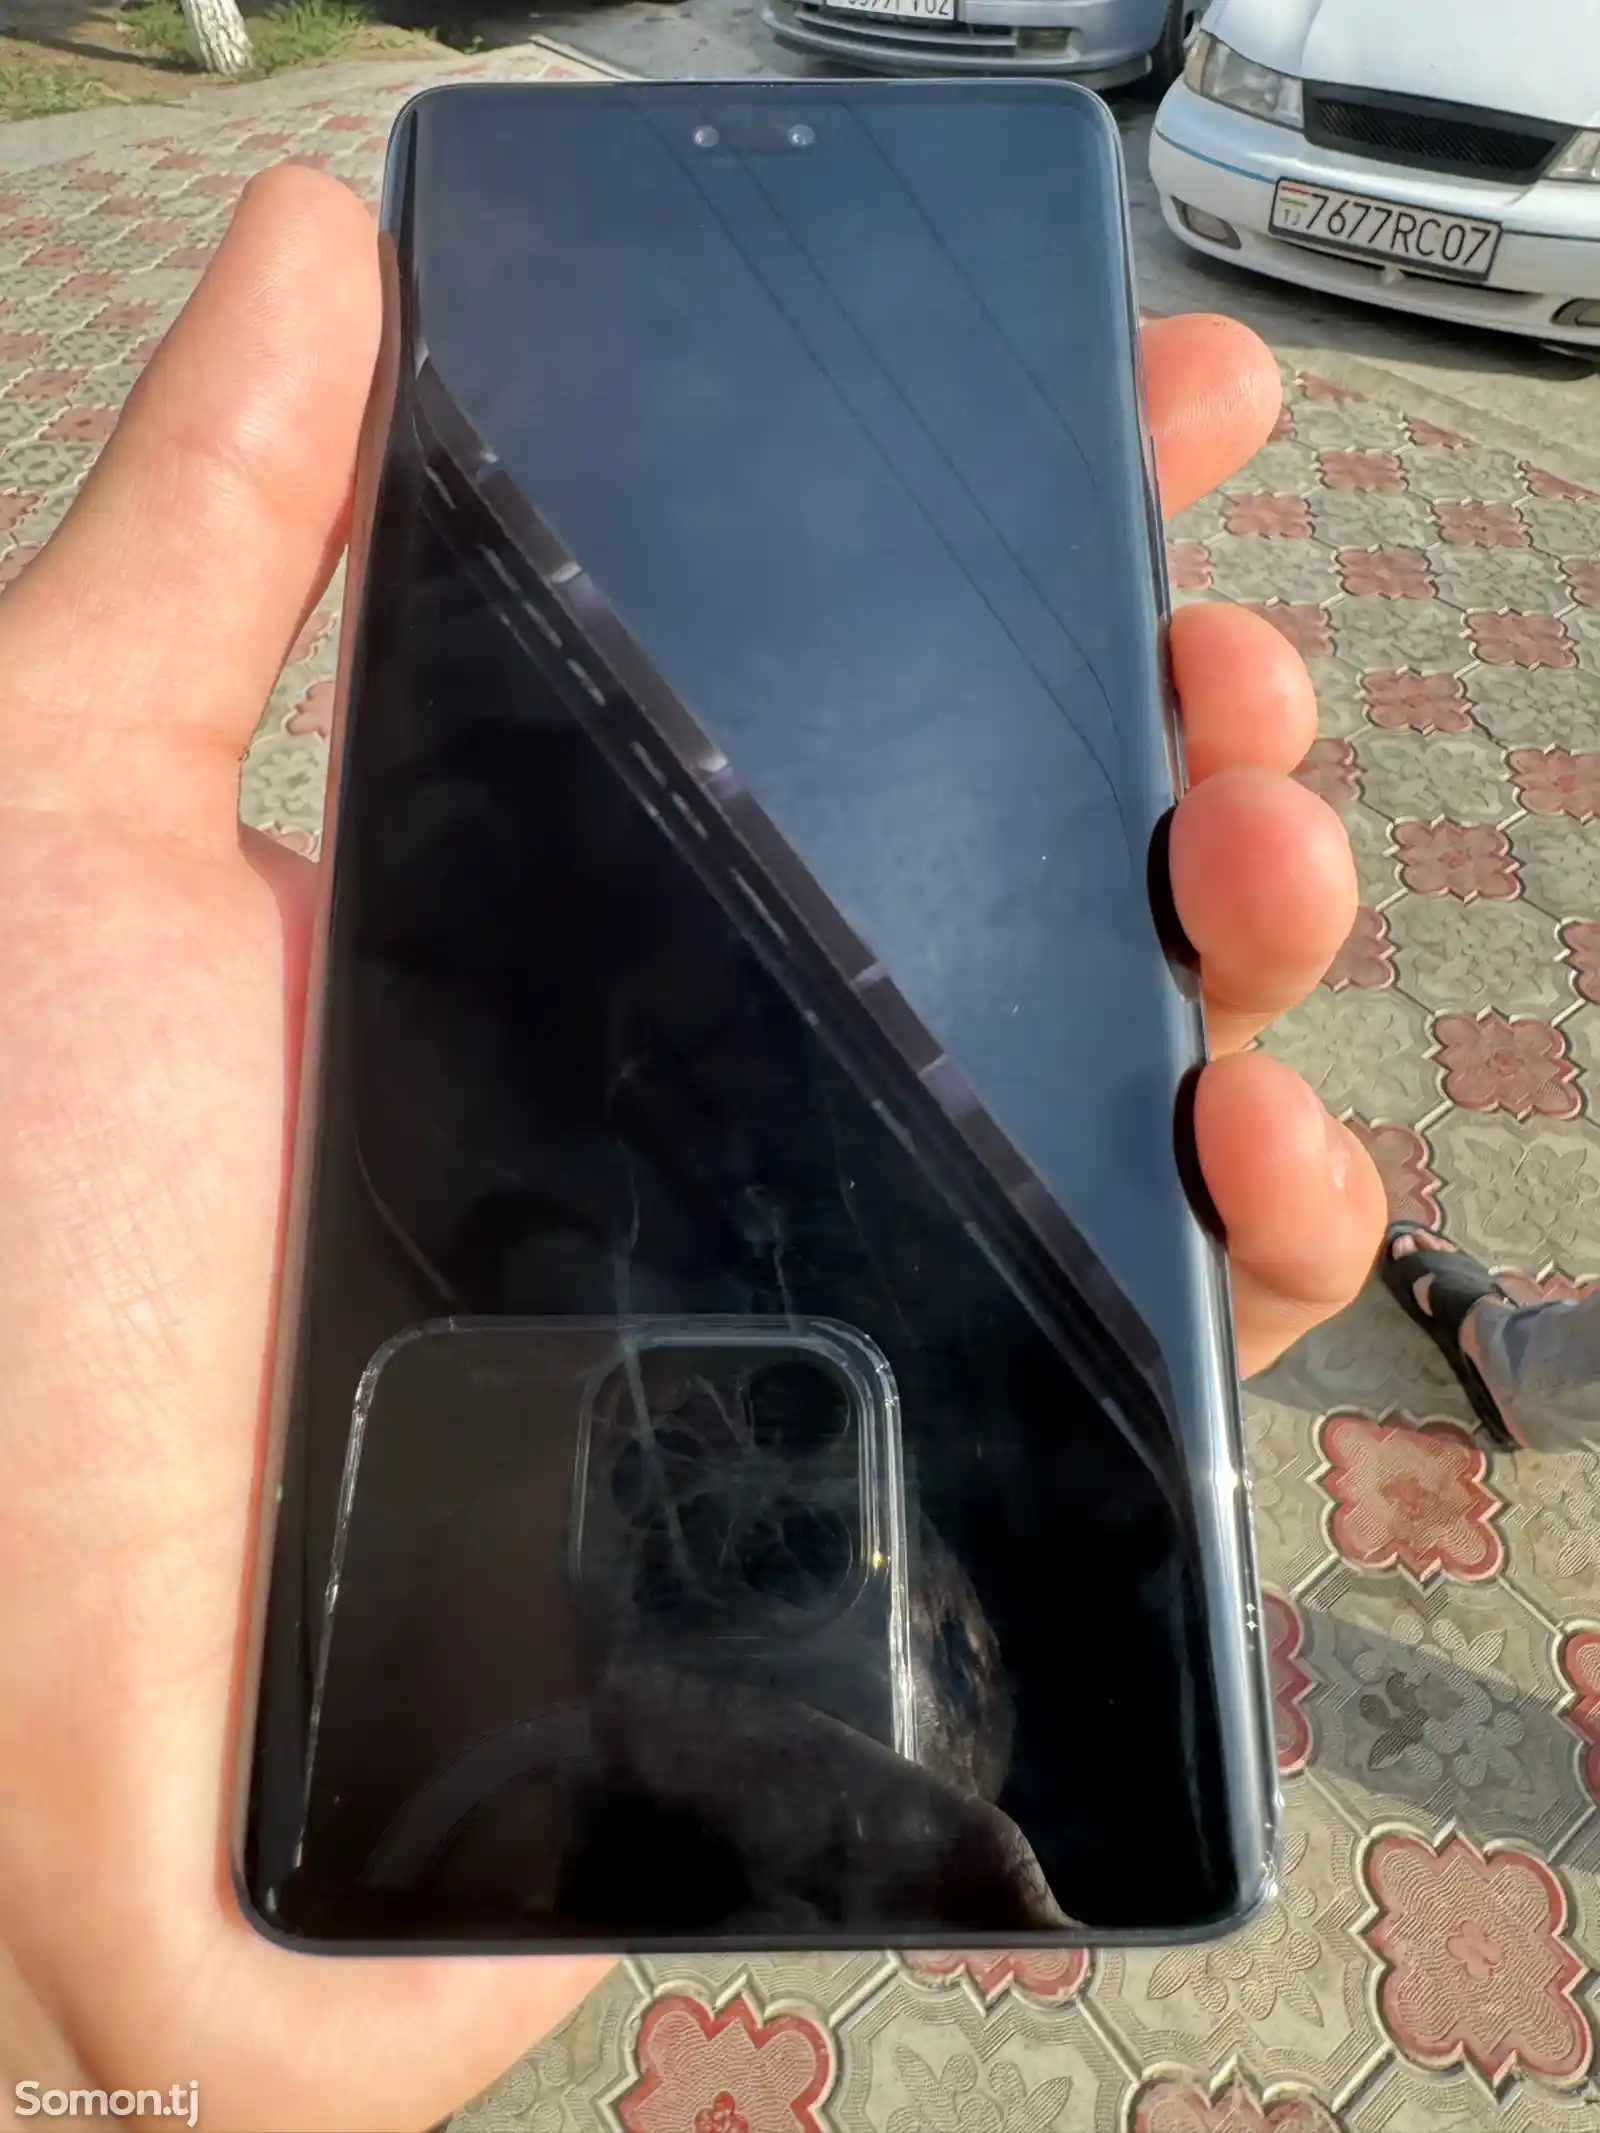 Xiaomi Mi 13 Lite-1